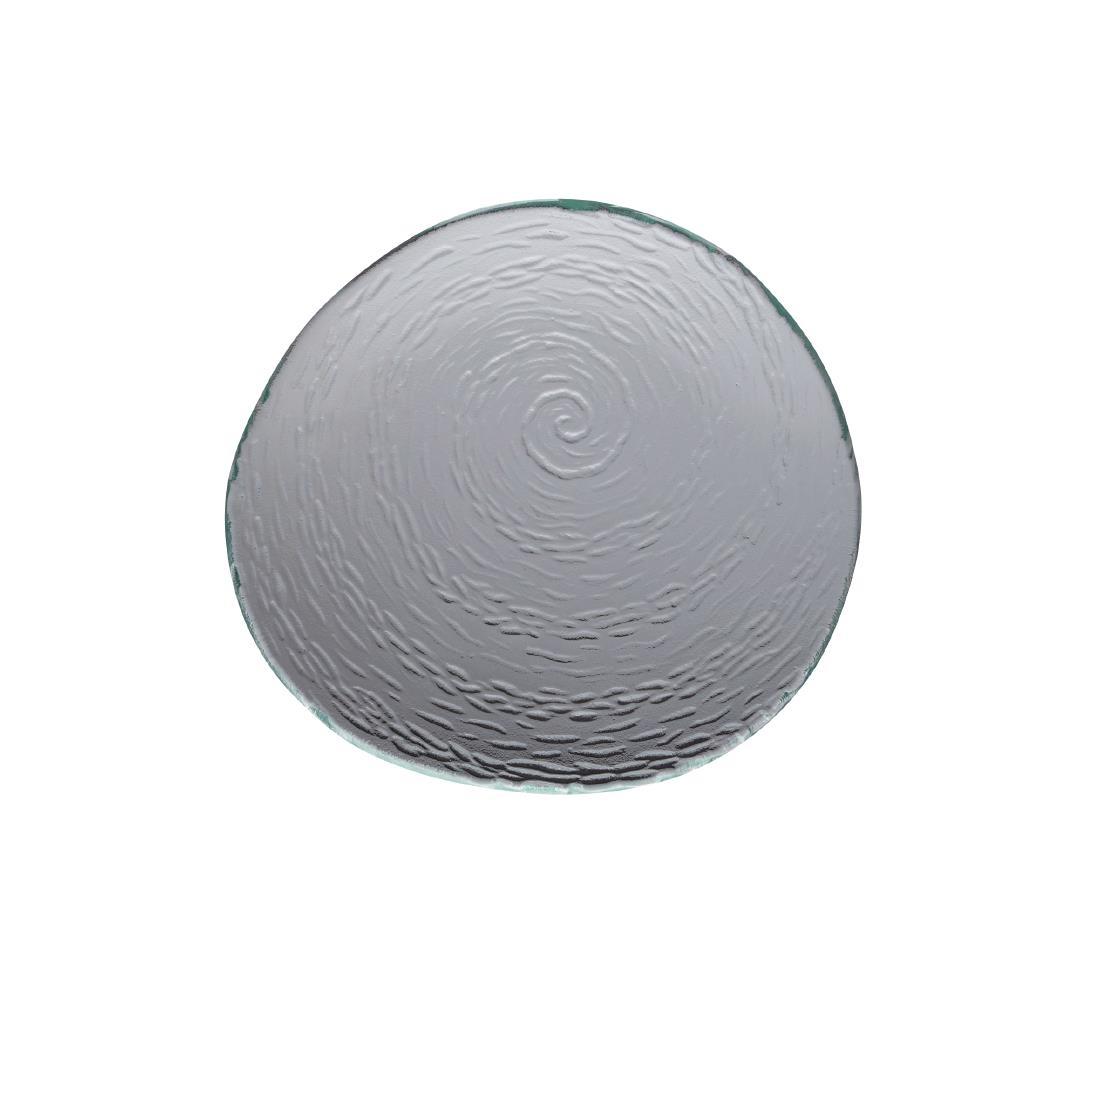 Steelite Scape Glass Platters 250mm (Pack of 12) - VV712  - 1